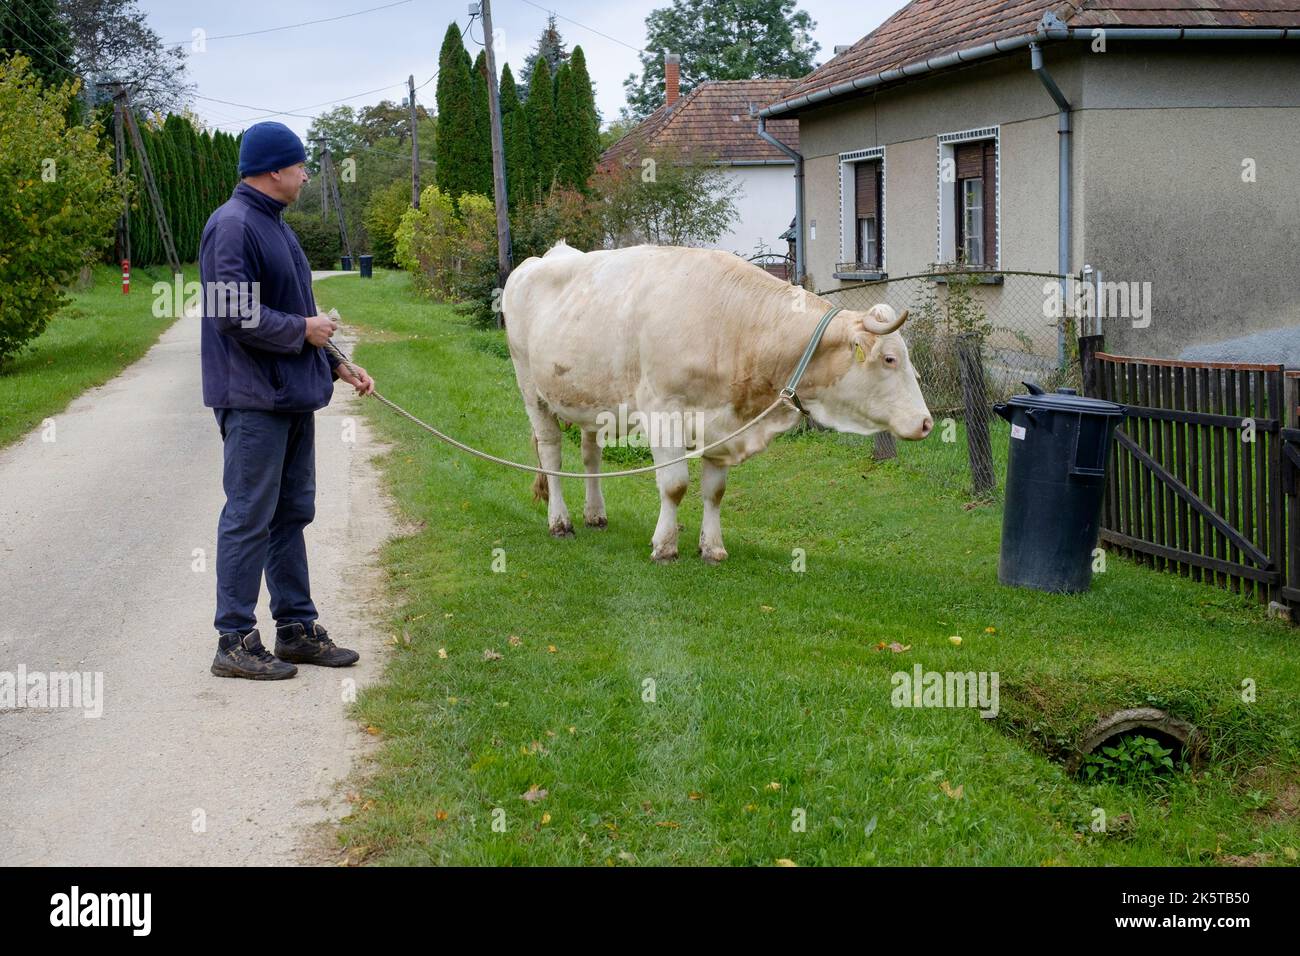 local man walking his dairy cow to pasture through small rural hamlet lane zala county hungary Stock Photo